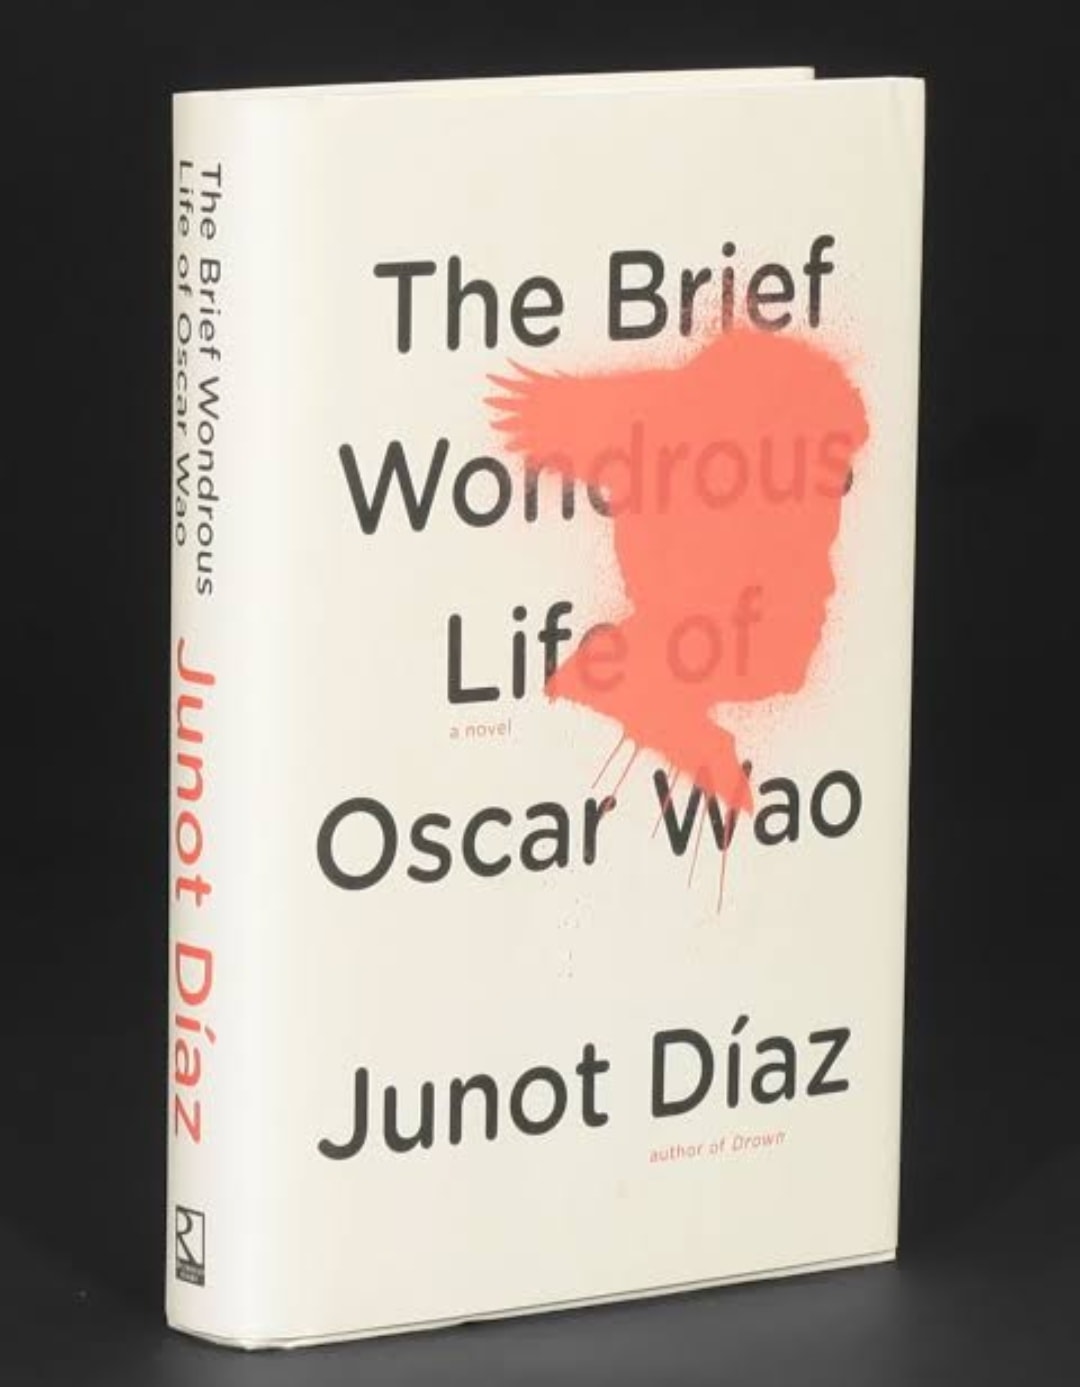 The brief wondrous life of oscar Wao